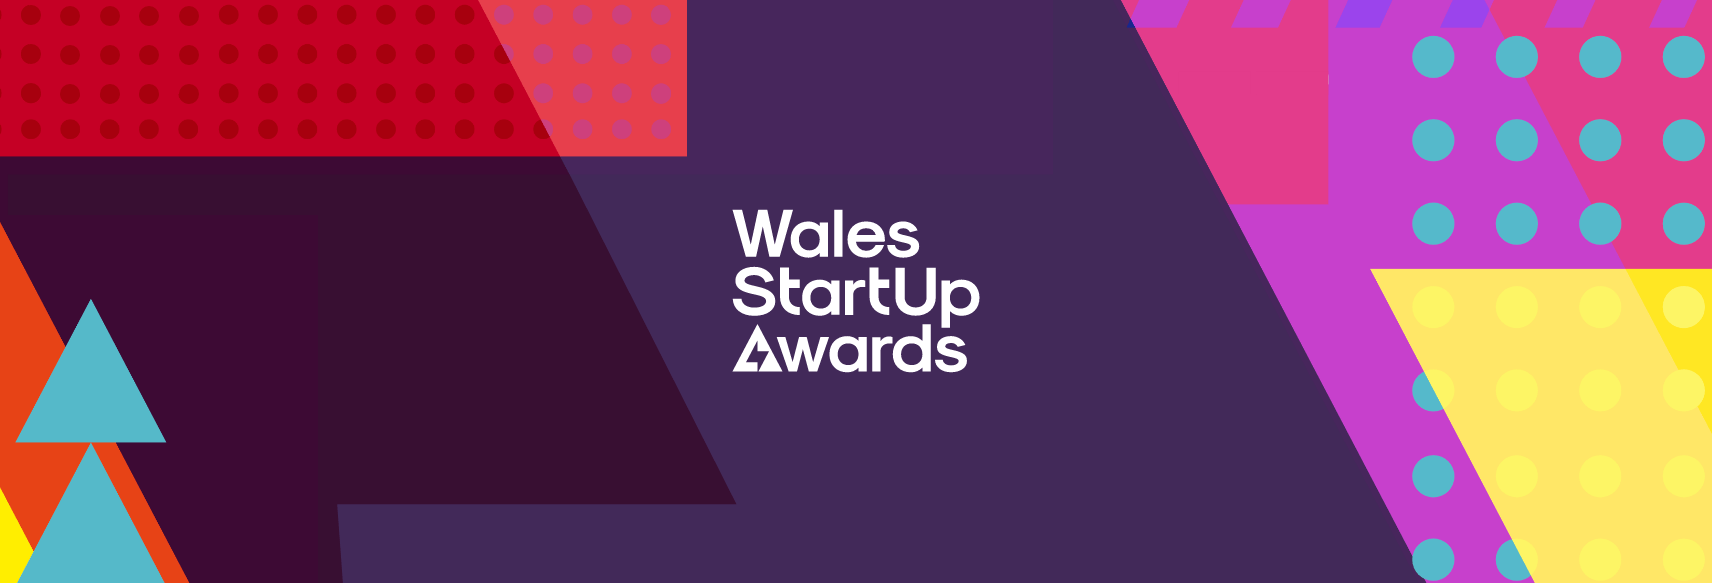 Wales StartUp Awards